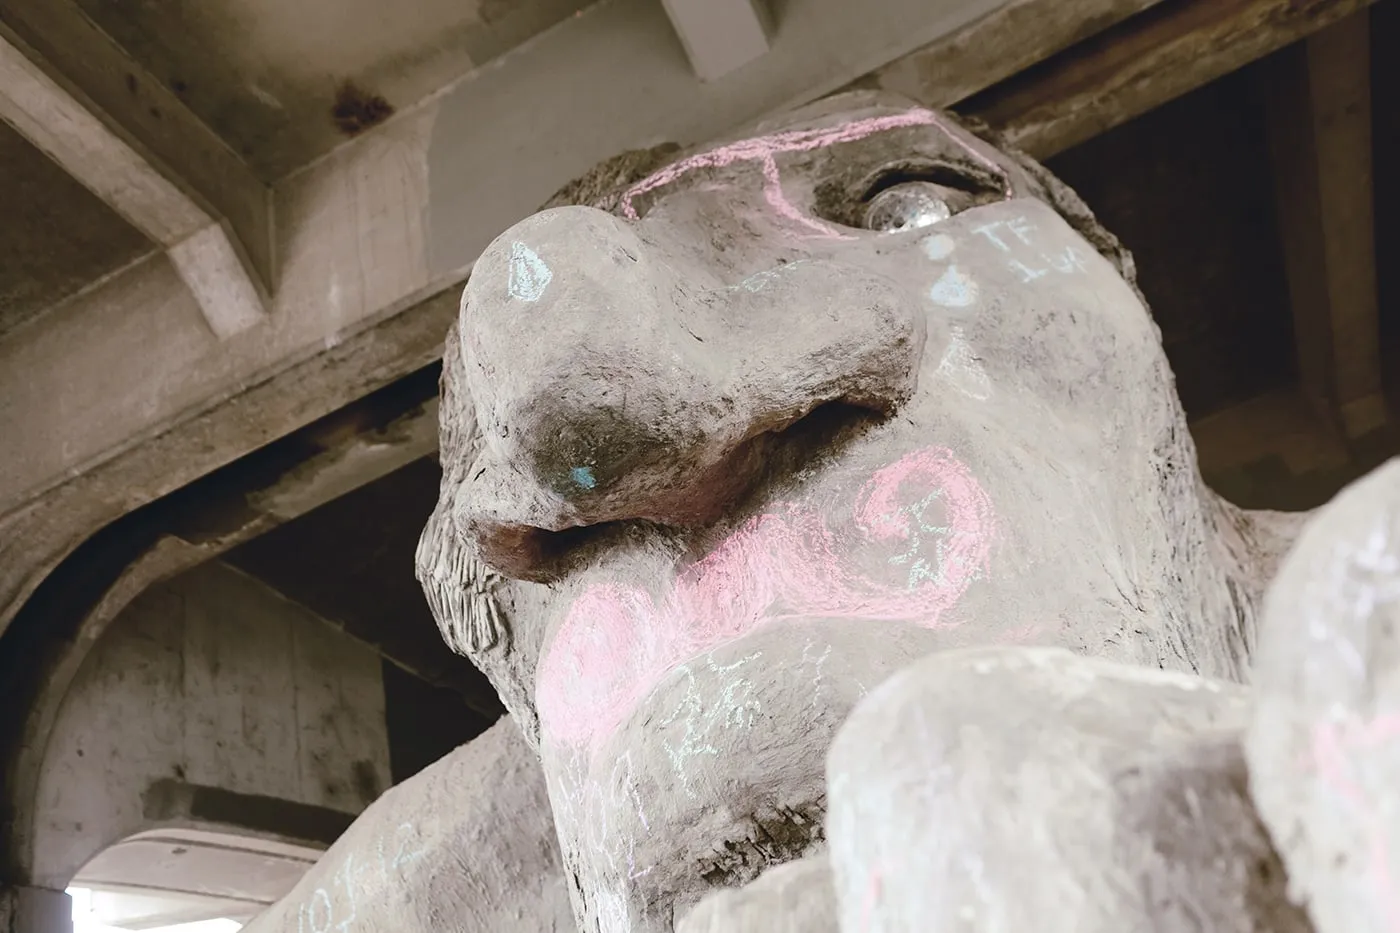 The Fremont Troll, a roadside attraction in Seattle, Washington.